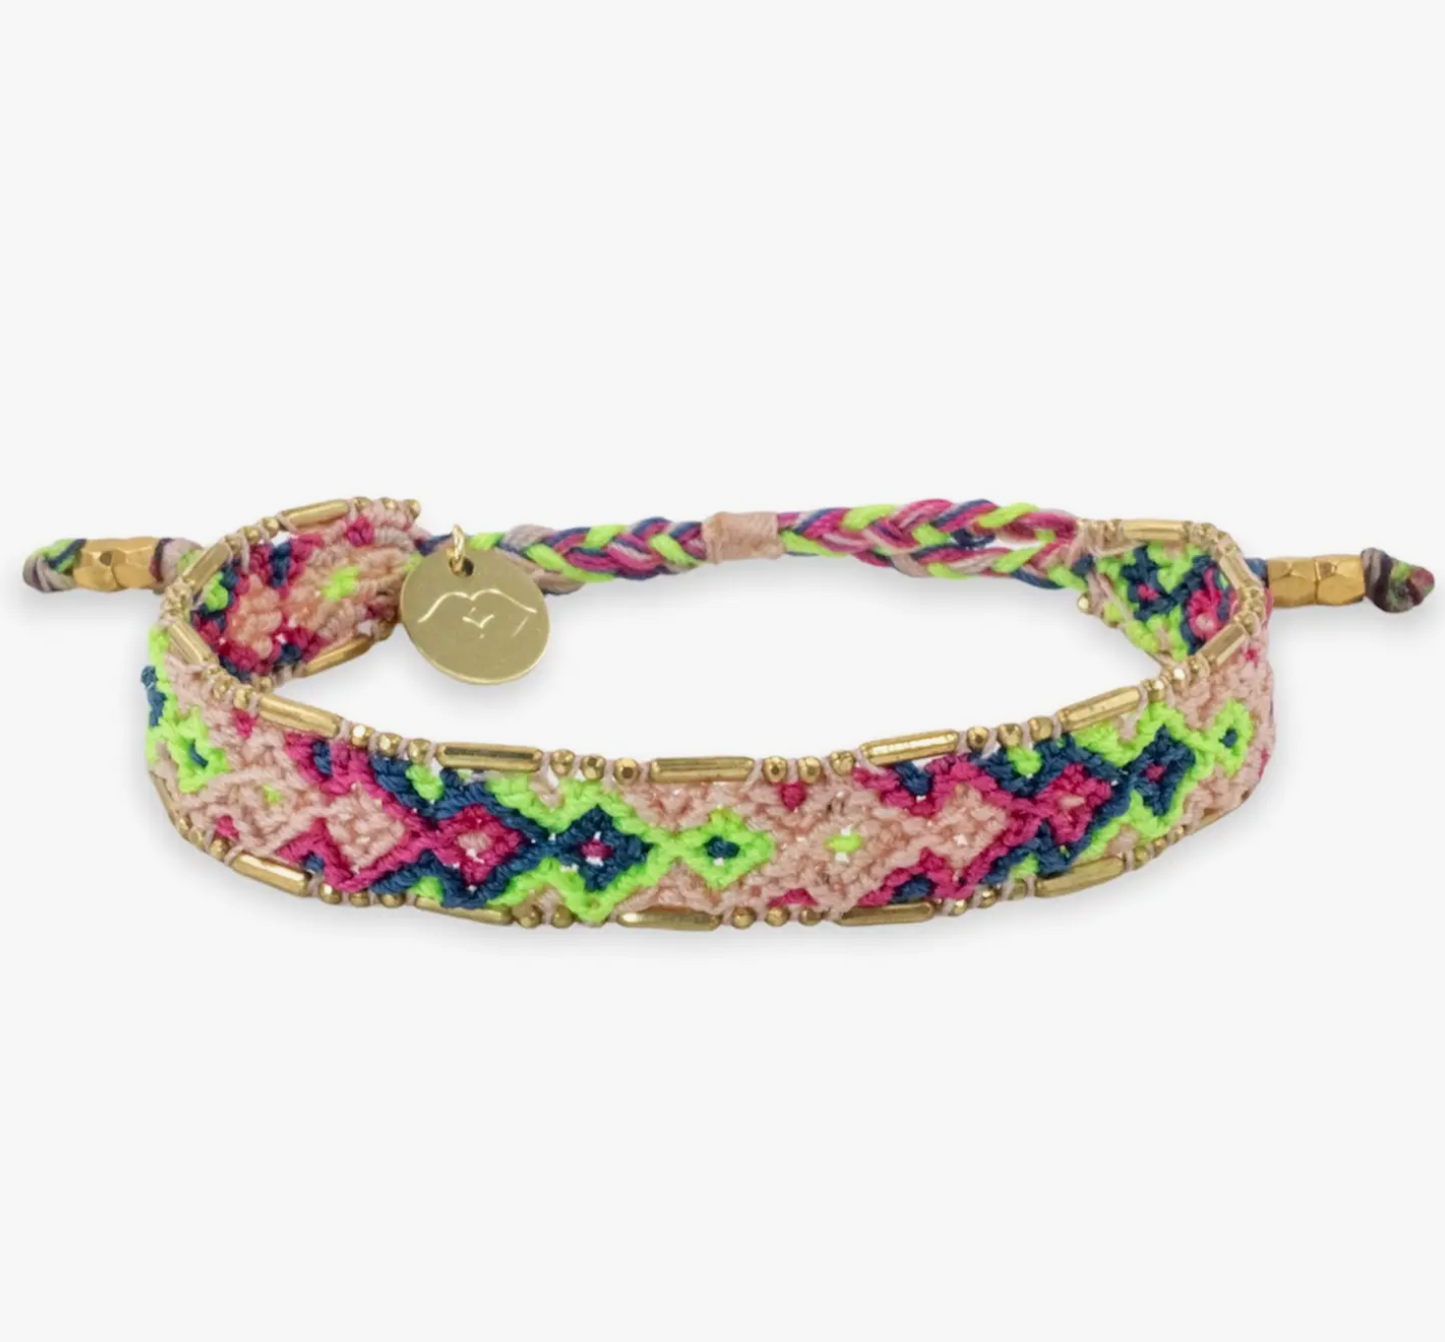 Bali Friendship Bracelet